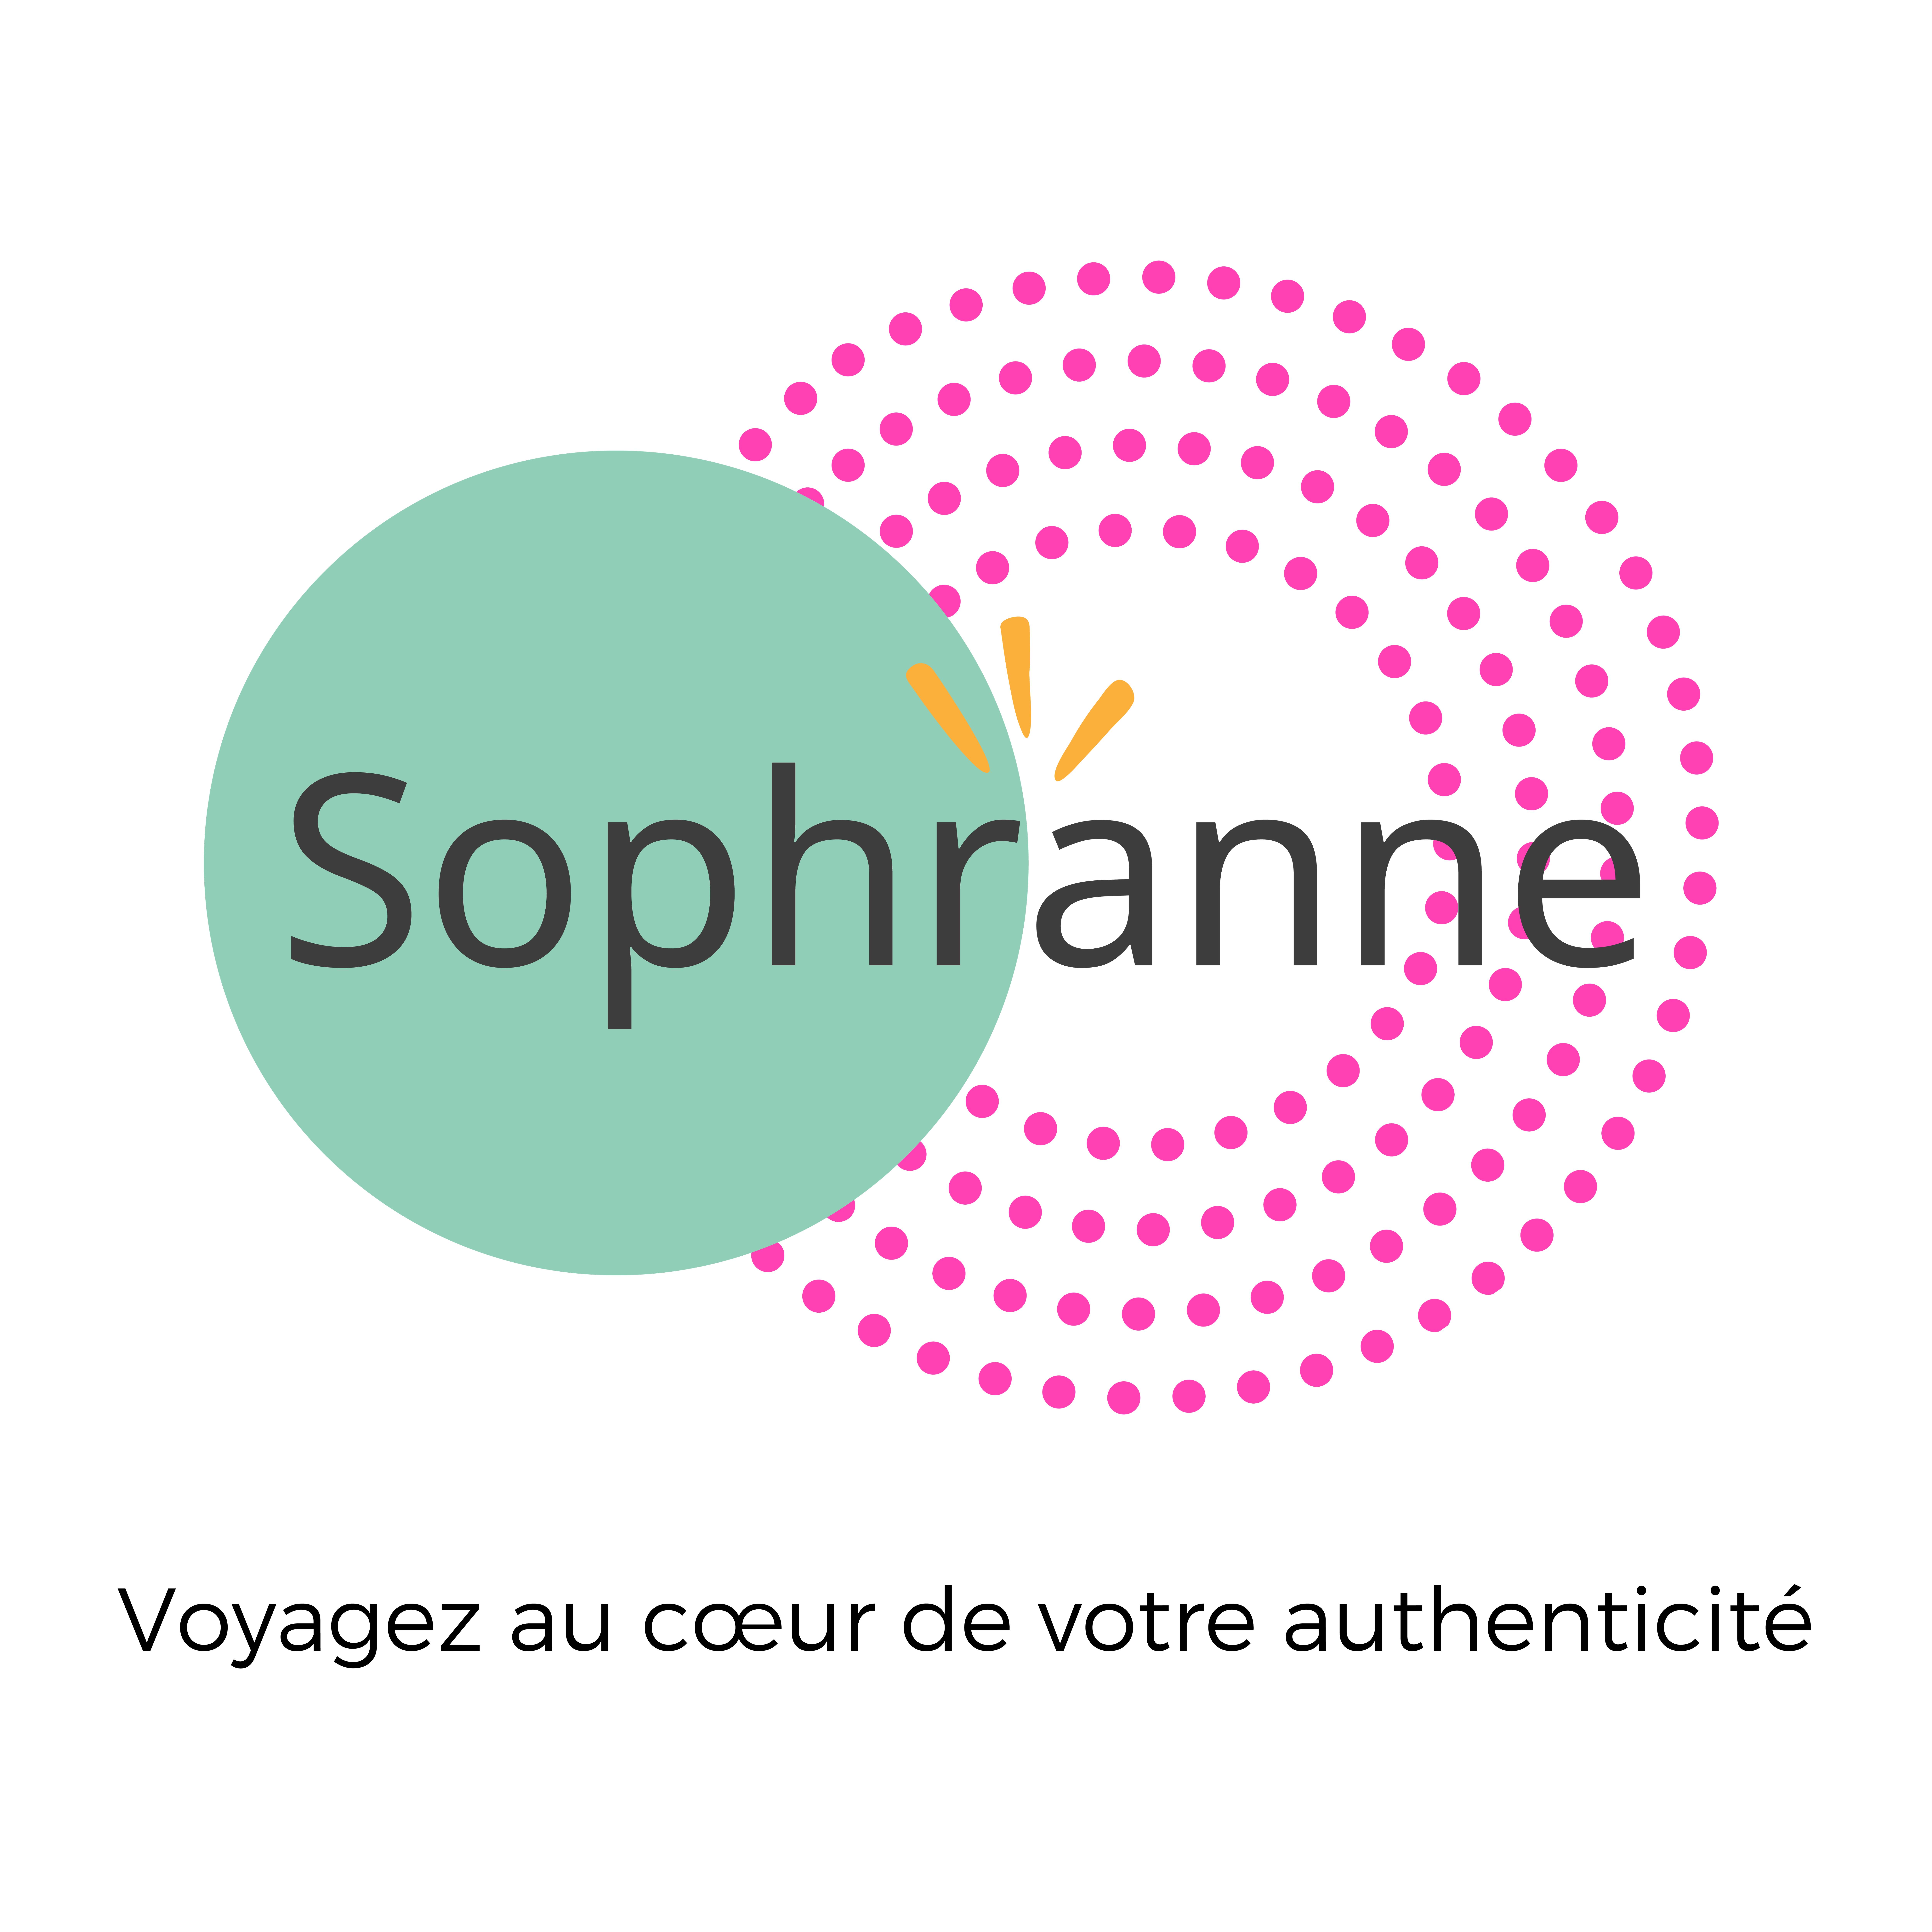 Sophranne